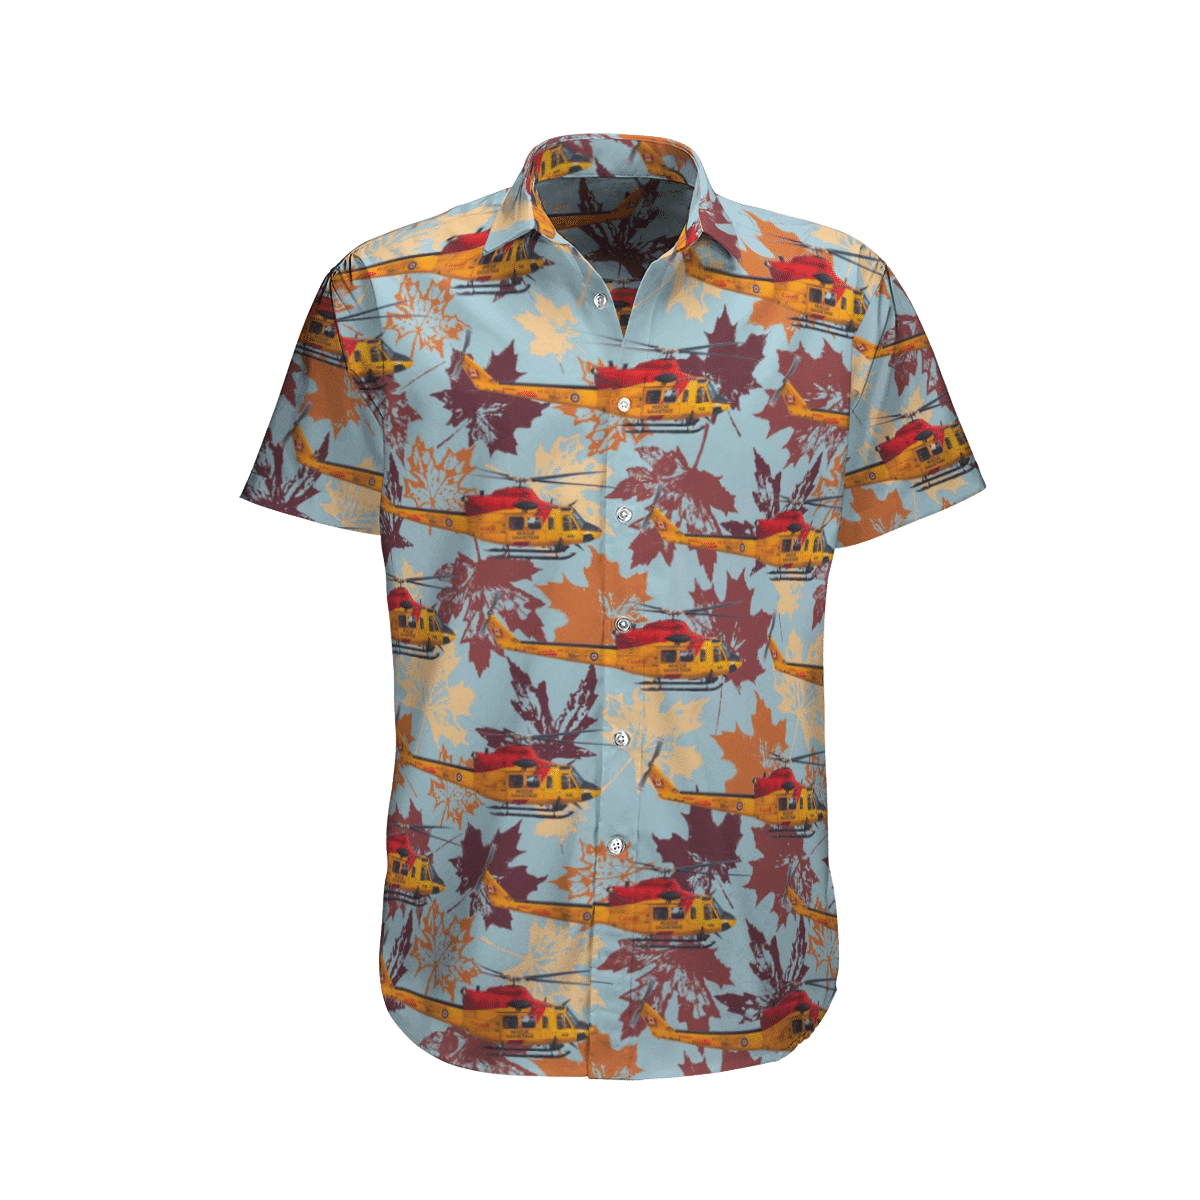 Get a new Hawaiian shirt to enjoy summer vacation 106